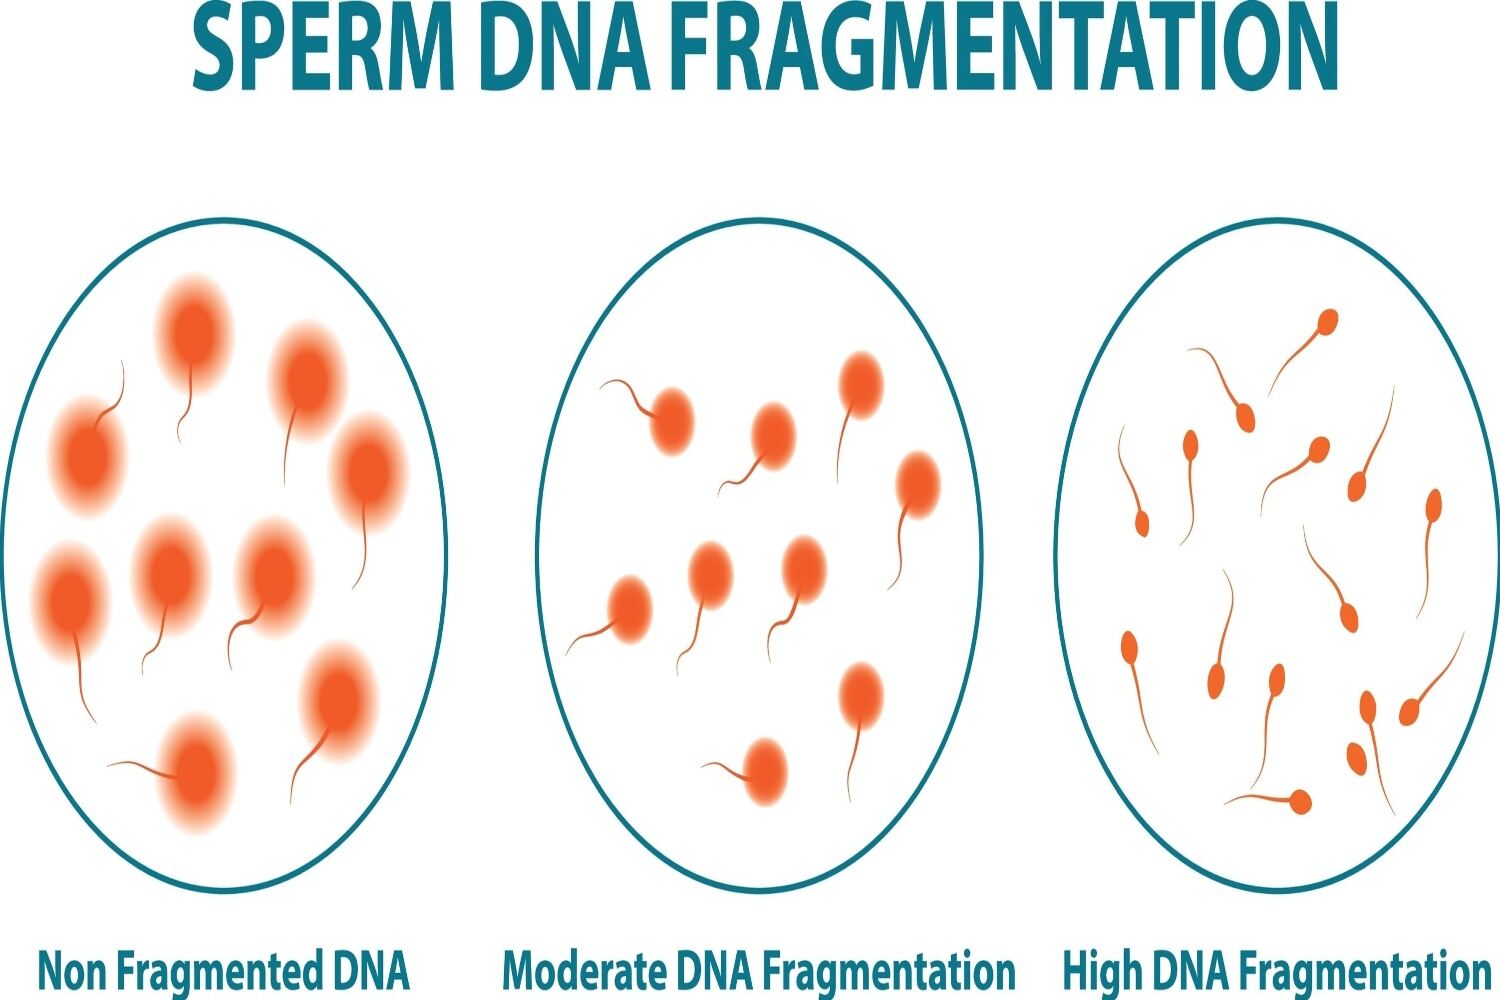 Measuring sperm DNA fragmentation